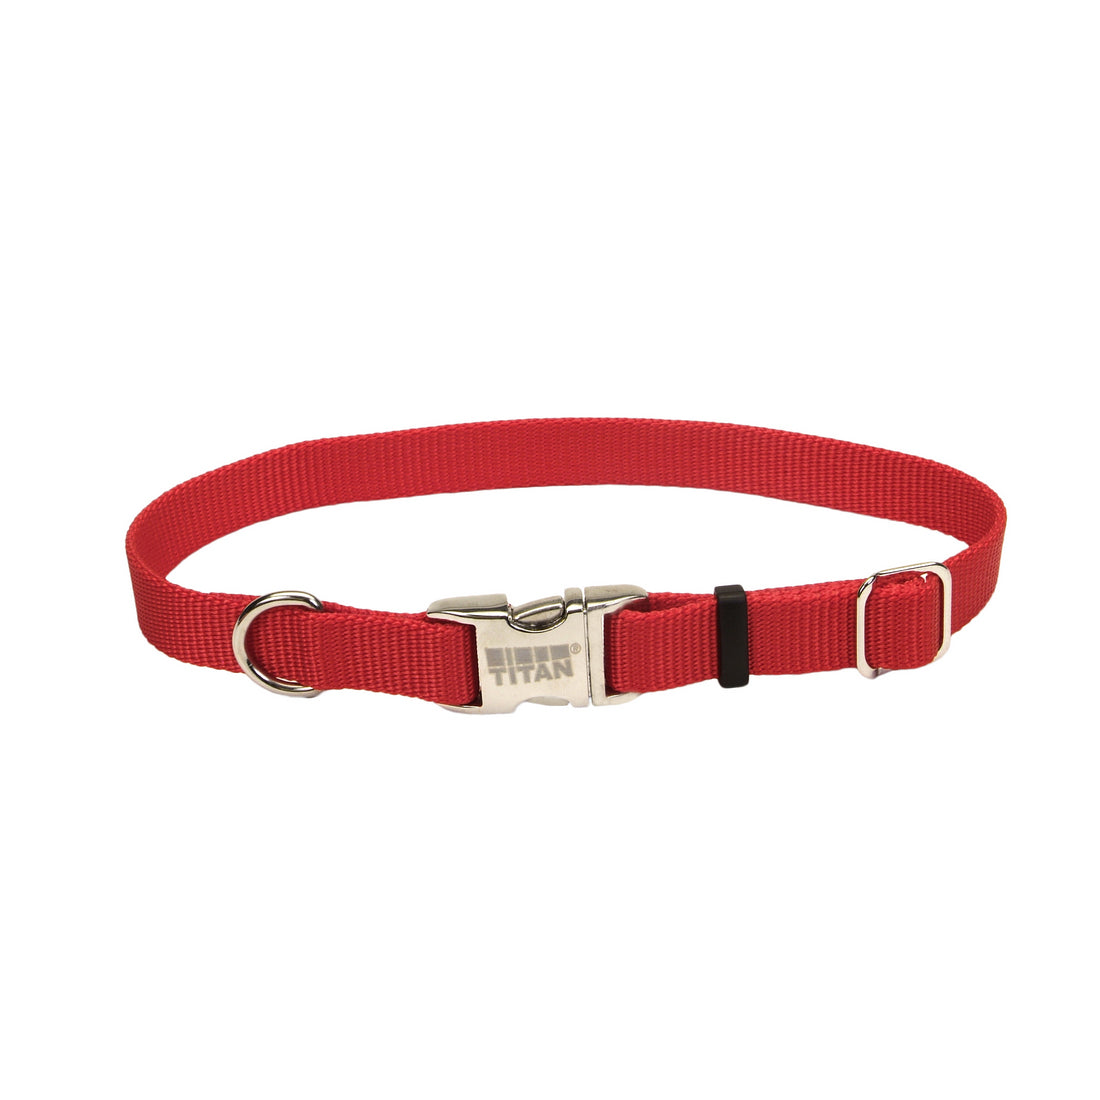 Coastal Adjustable Nylon Collar with Metal Buckle Large Red